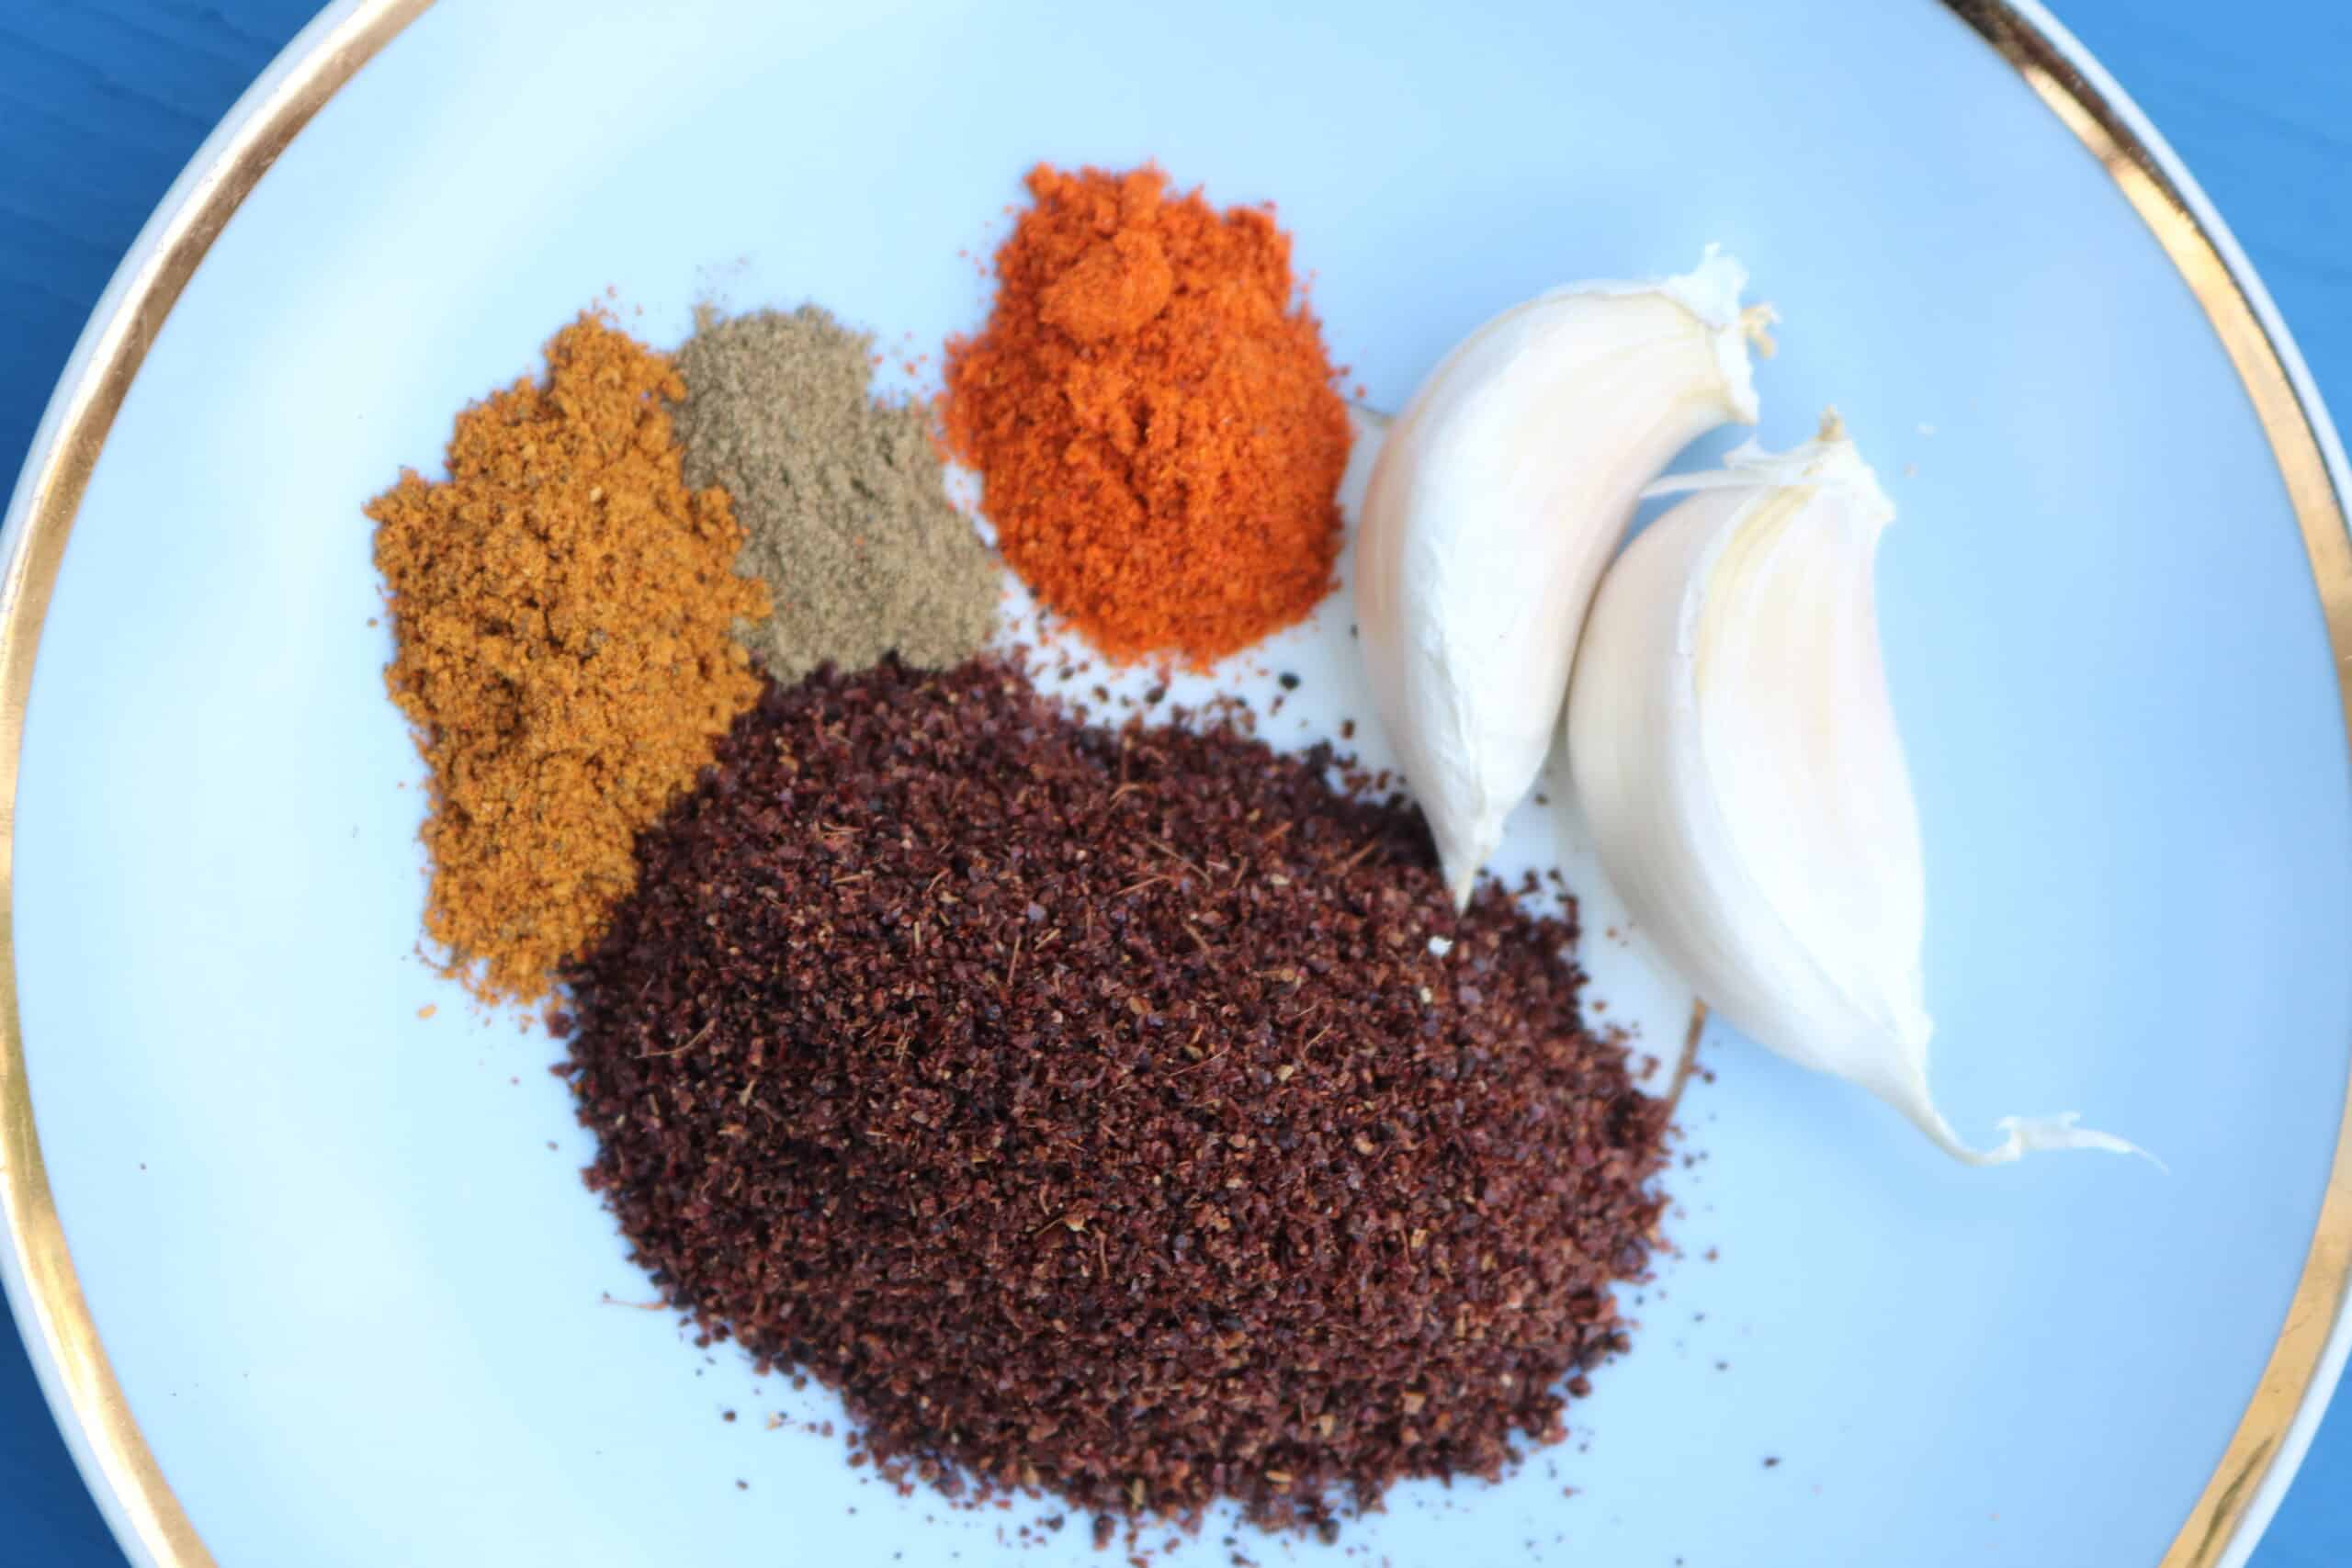 Spices sumac and garlic